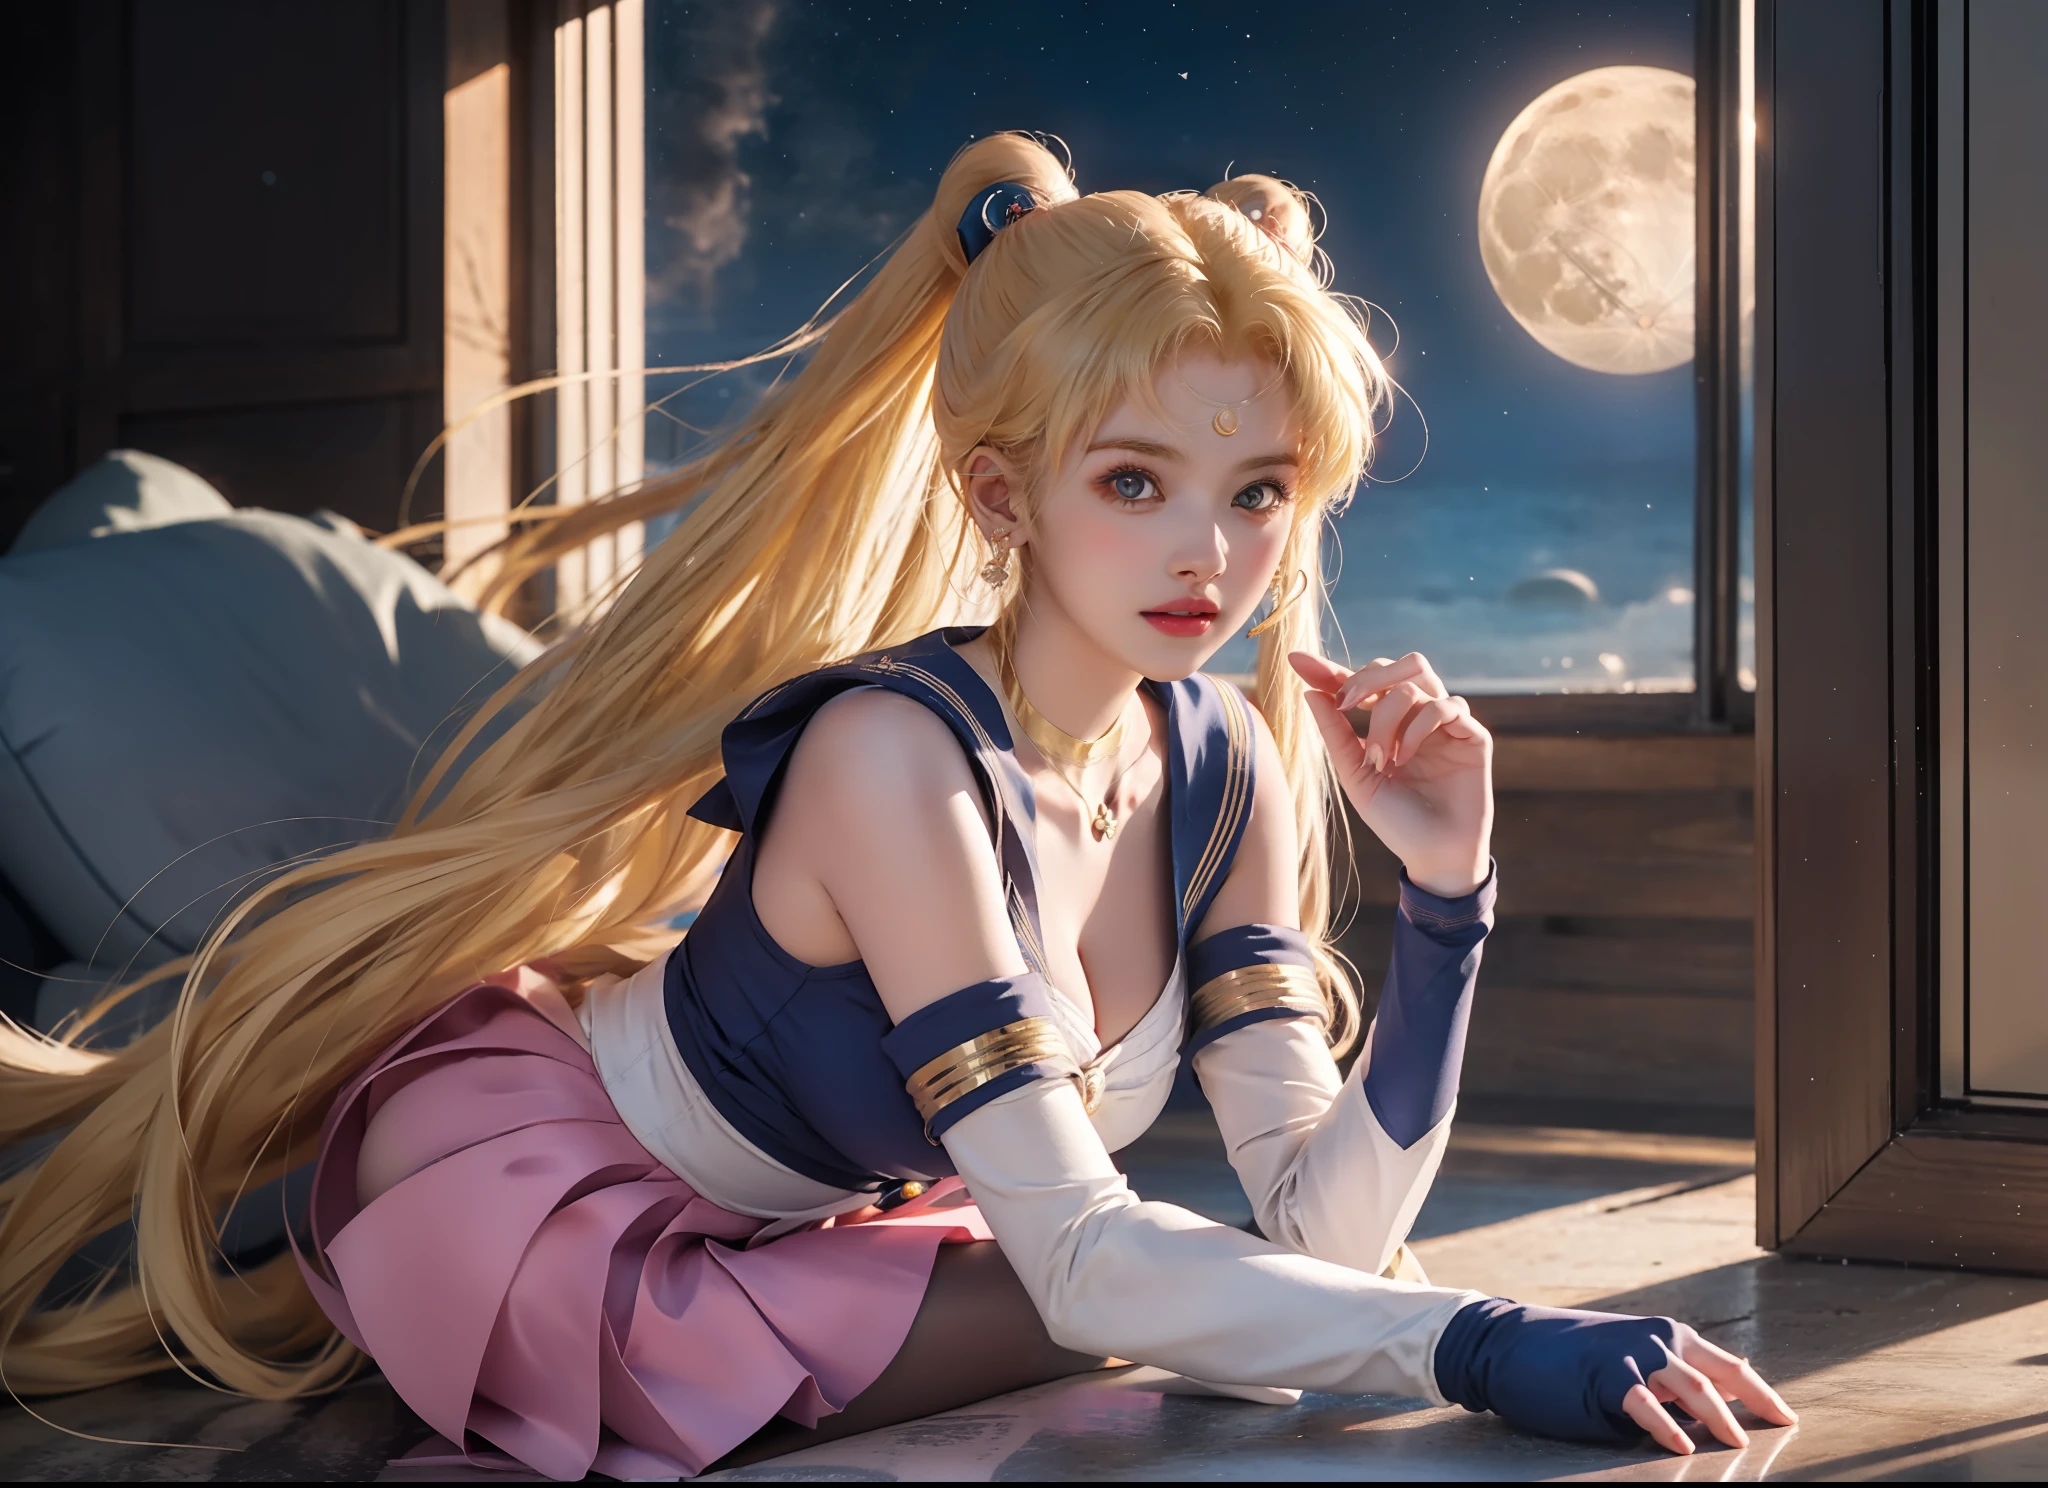 Sailor Moon is a sailor girl with long blonde hair and a pink skirt, Sailor Moon!!!!!!!!, Sailor Moon aesthetic, Sailor Moon style, inspired por Sailor Moon, the Sailor Moon. lindo, por Sailor Moon, também conhecido como artemis, o selene, Também conhecido como Artemis ou Selene, an retro anime image, Deusa da lua, inspirado em Naoko Takeuchi, Peitos Grandes, gigantesco , peituda, Decote, show Decote, vestido acanhado, vestido de marinheiro skimpy, Ultra HD